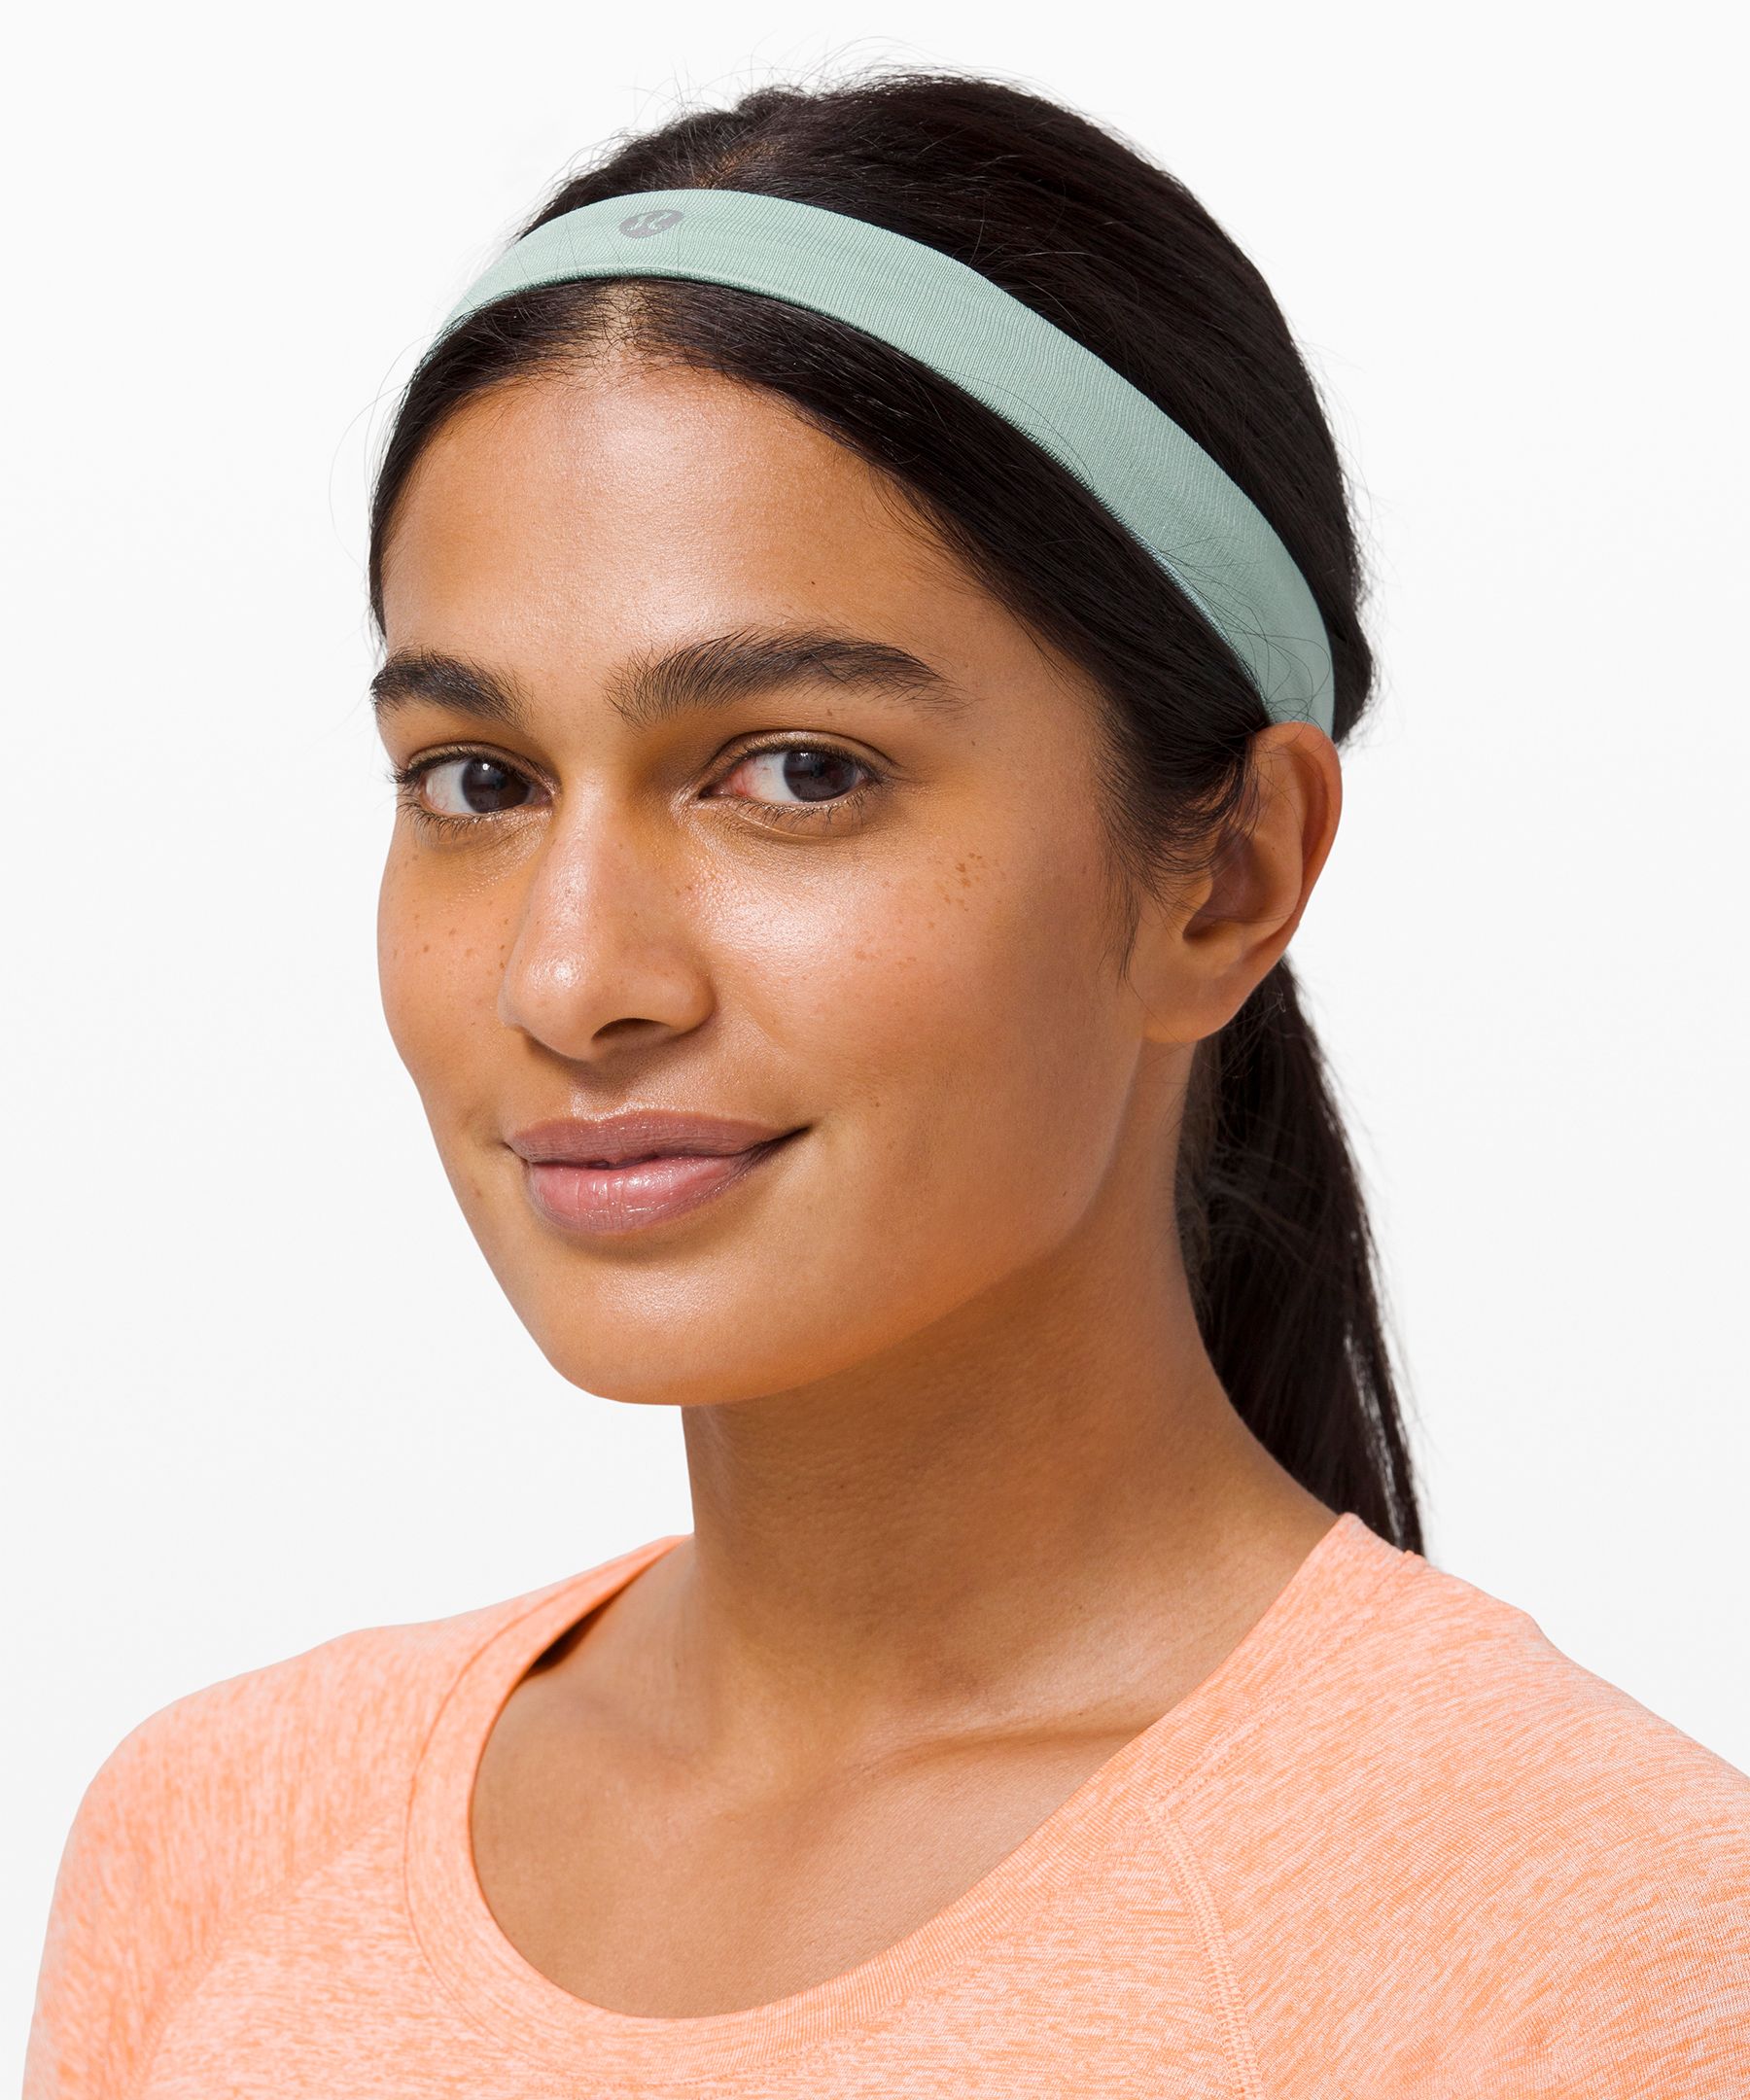 Lululemon Cardio Cross Trainer Headband In Green